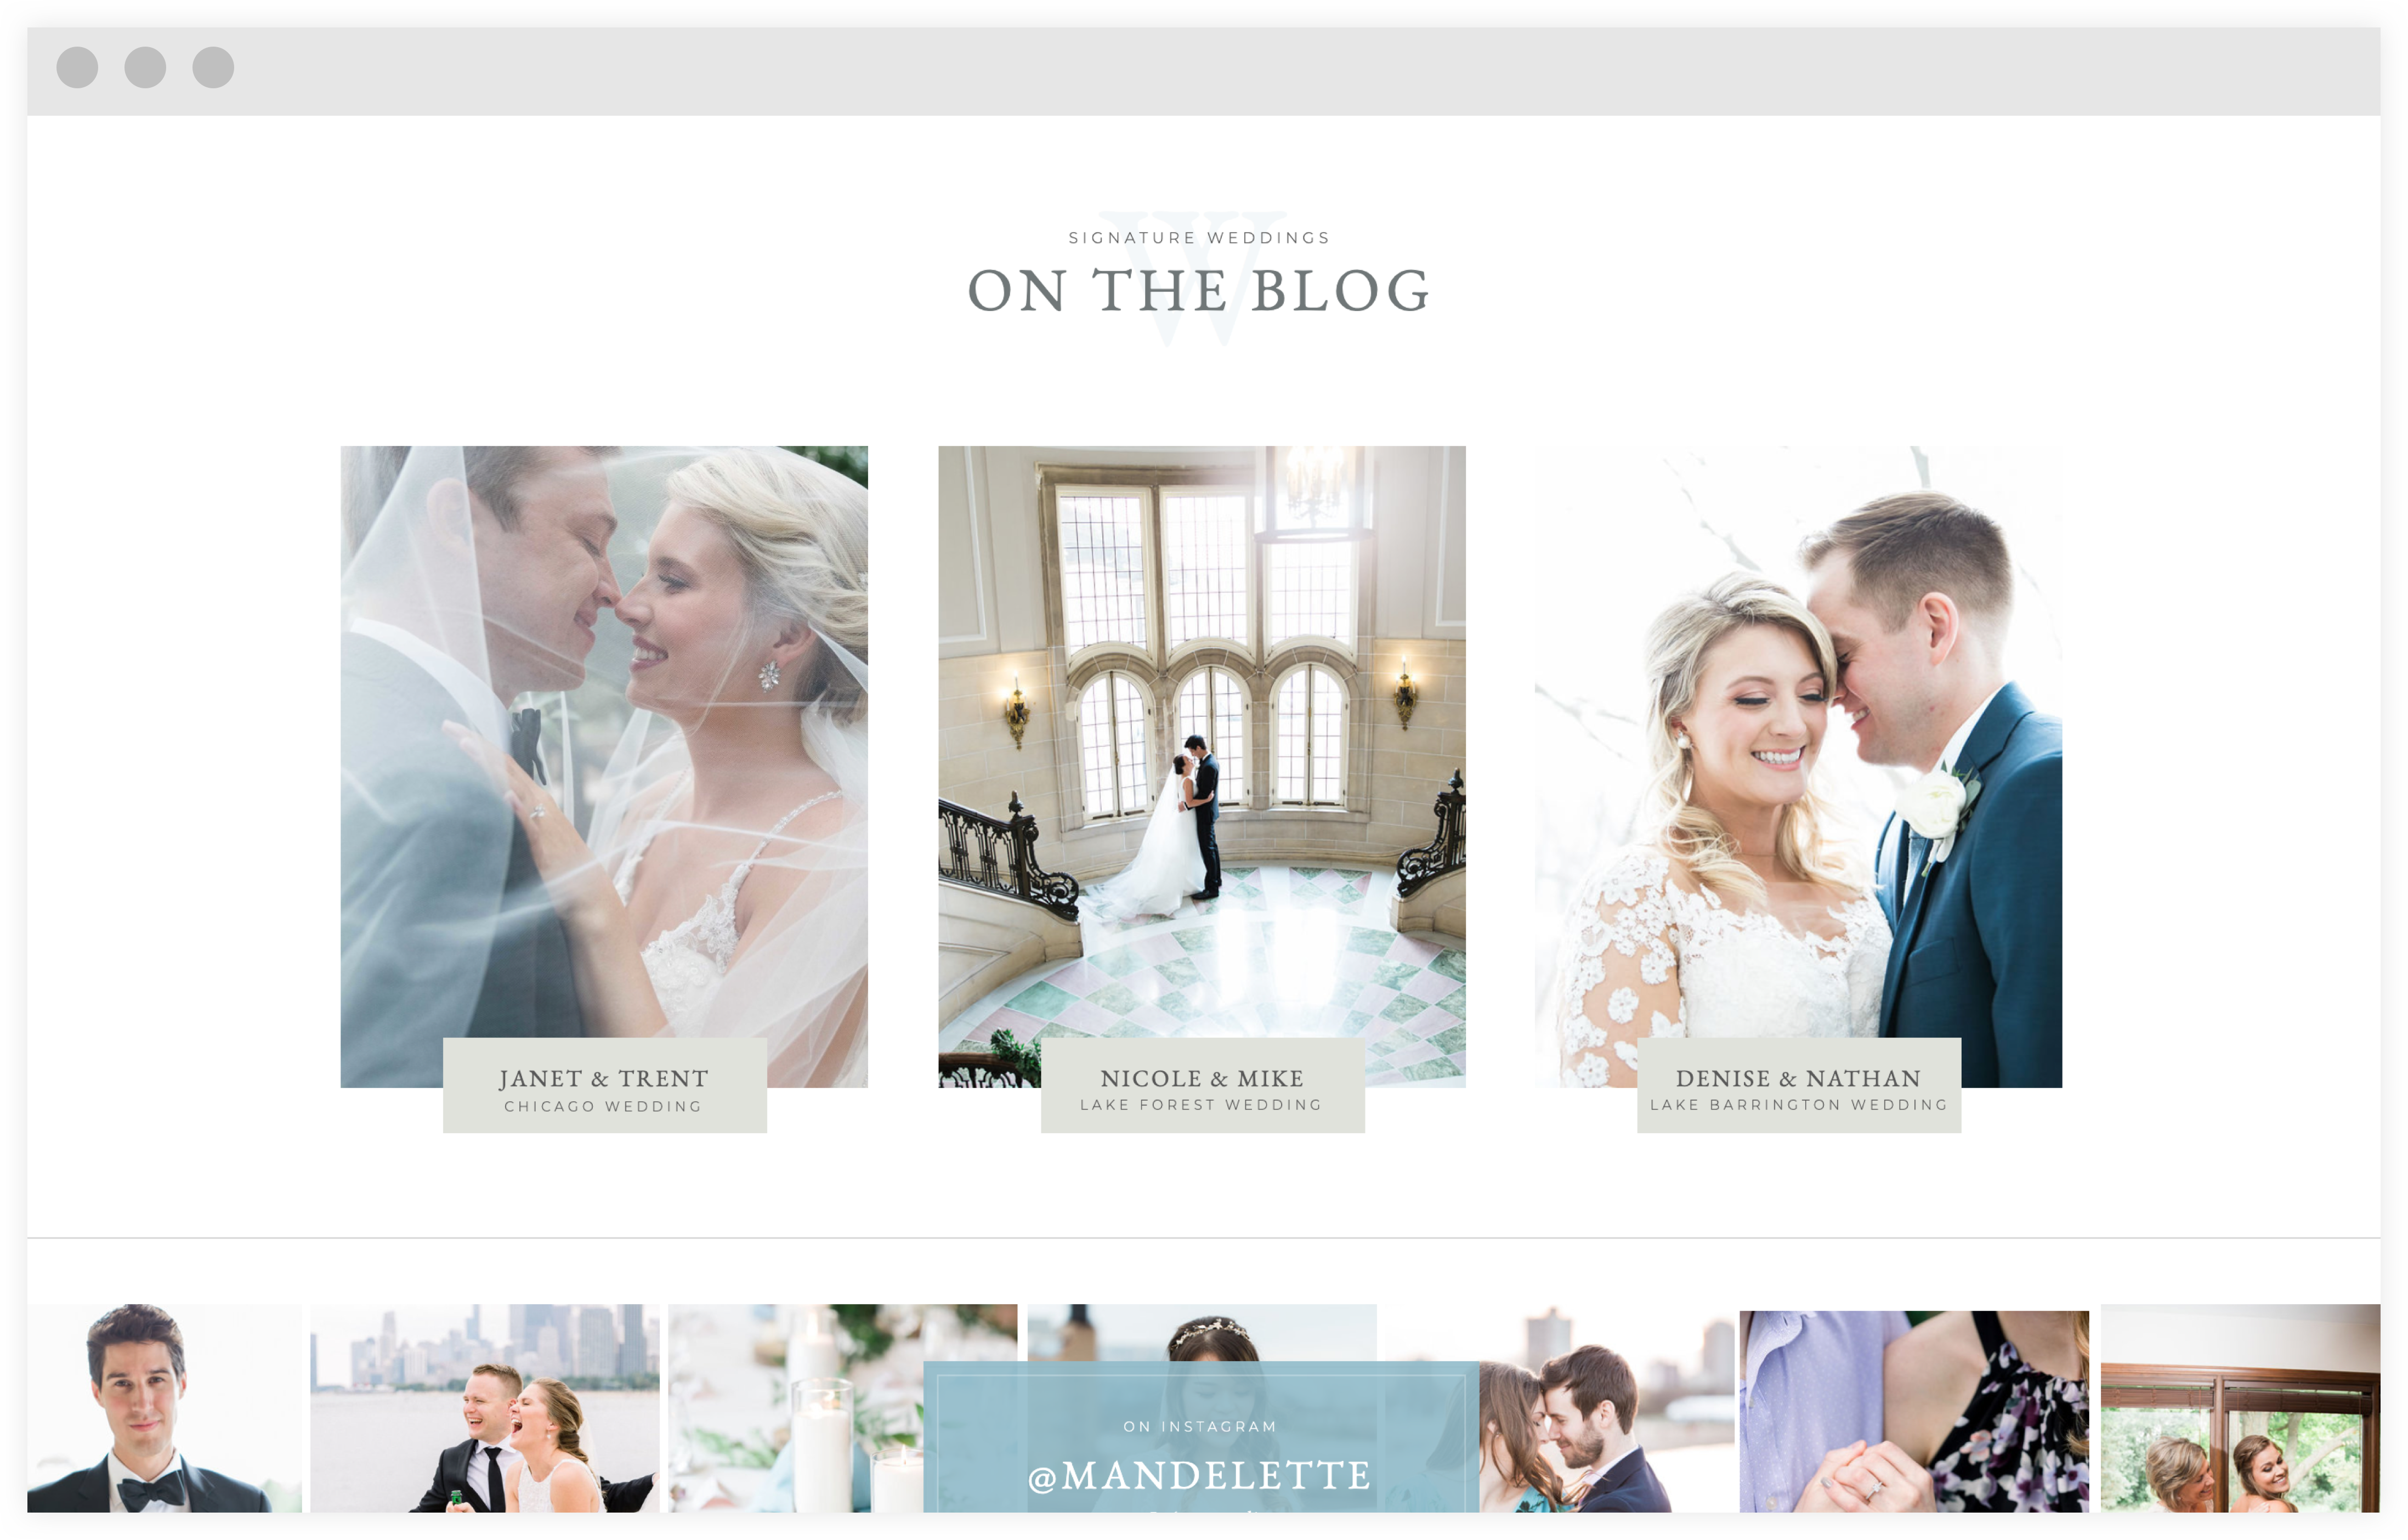 Wedding photographer Showit website blog